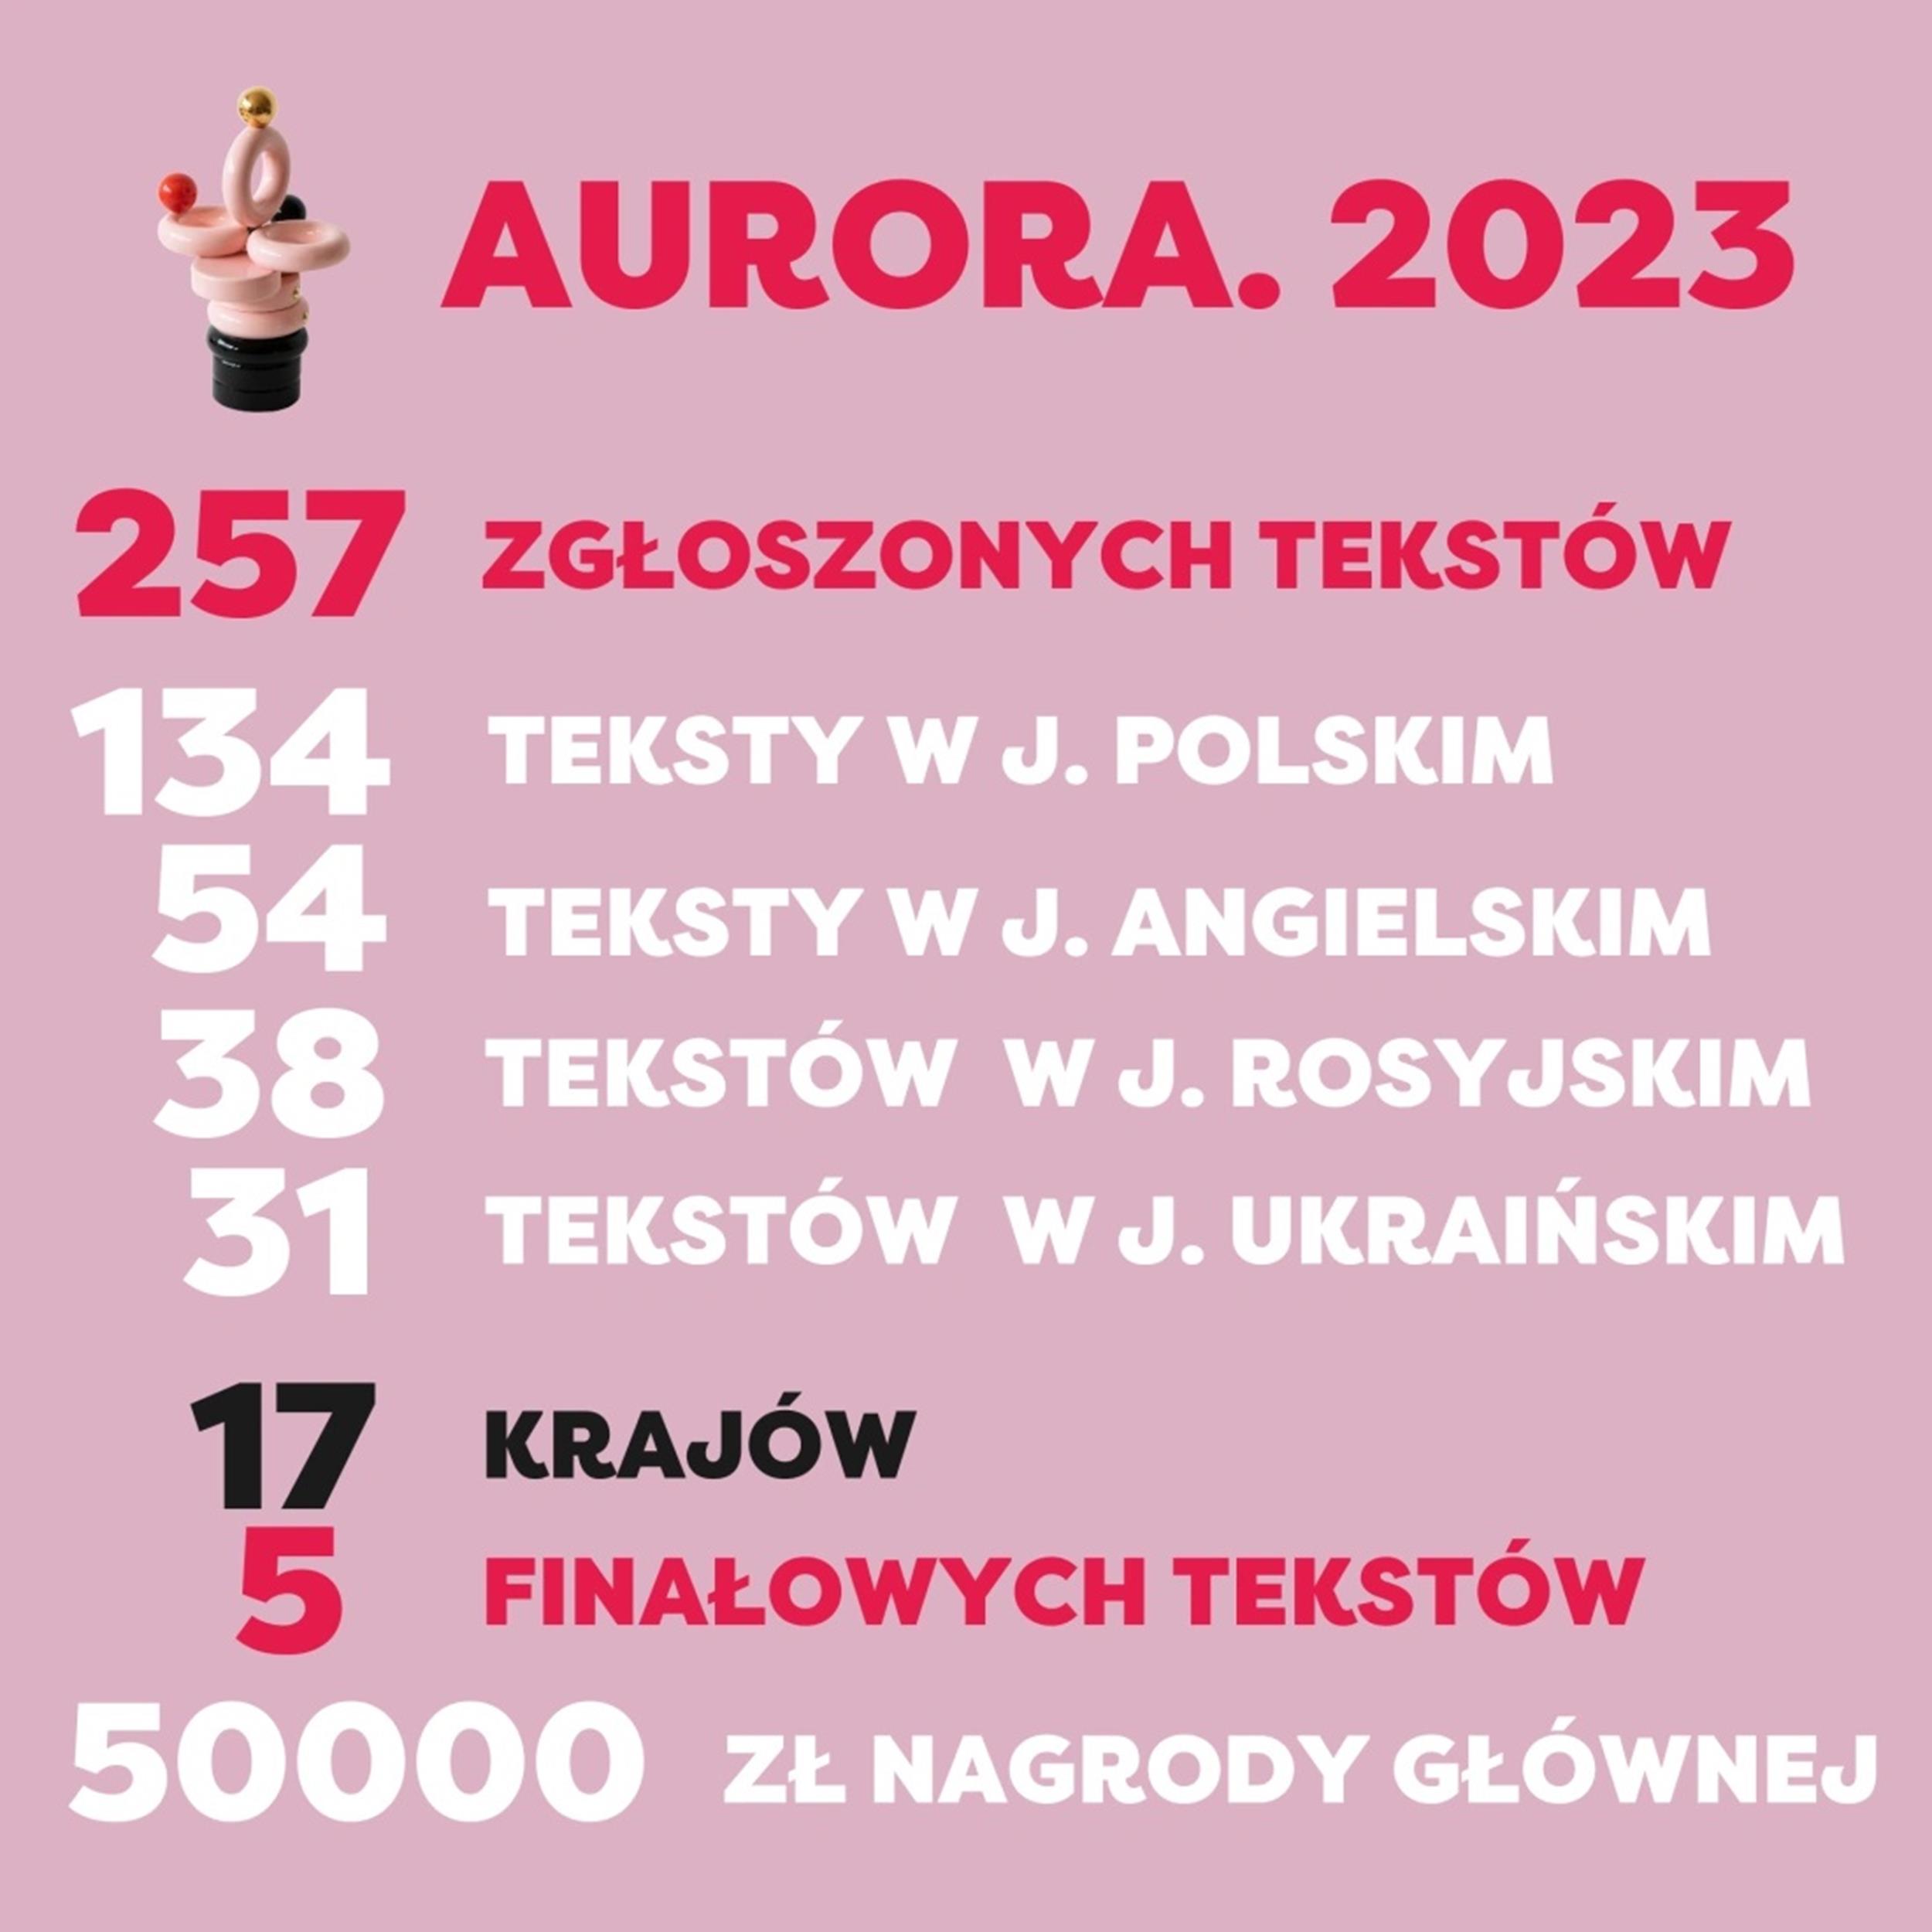 Aurora 2023 podsumowanie naboru